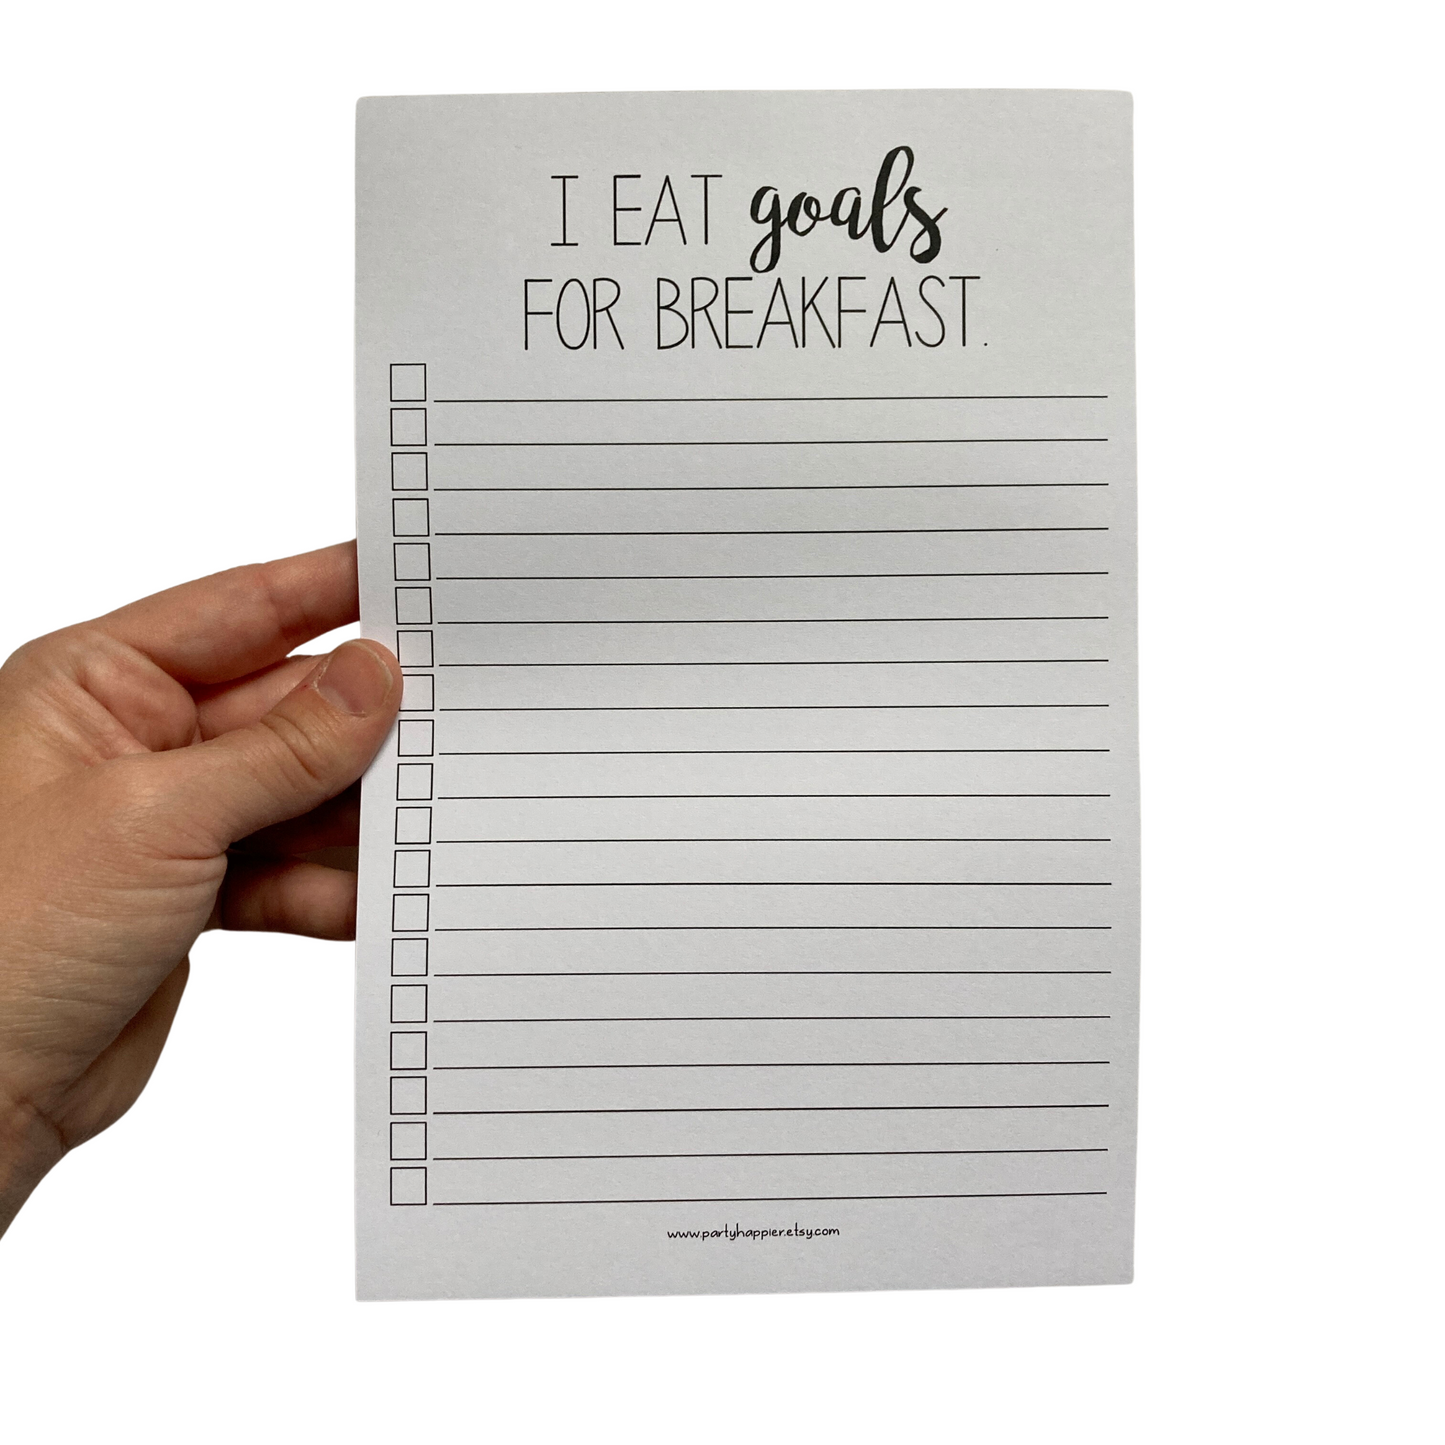 I Eat Goals For Breakfast Notepad